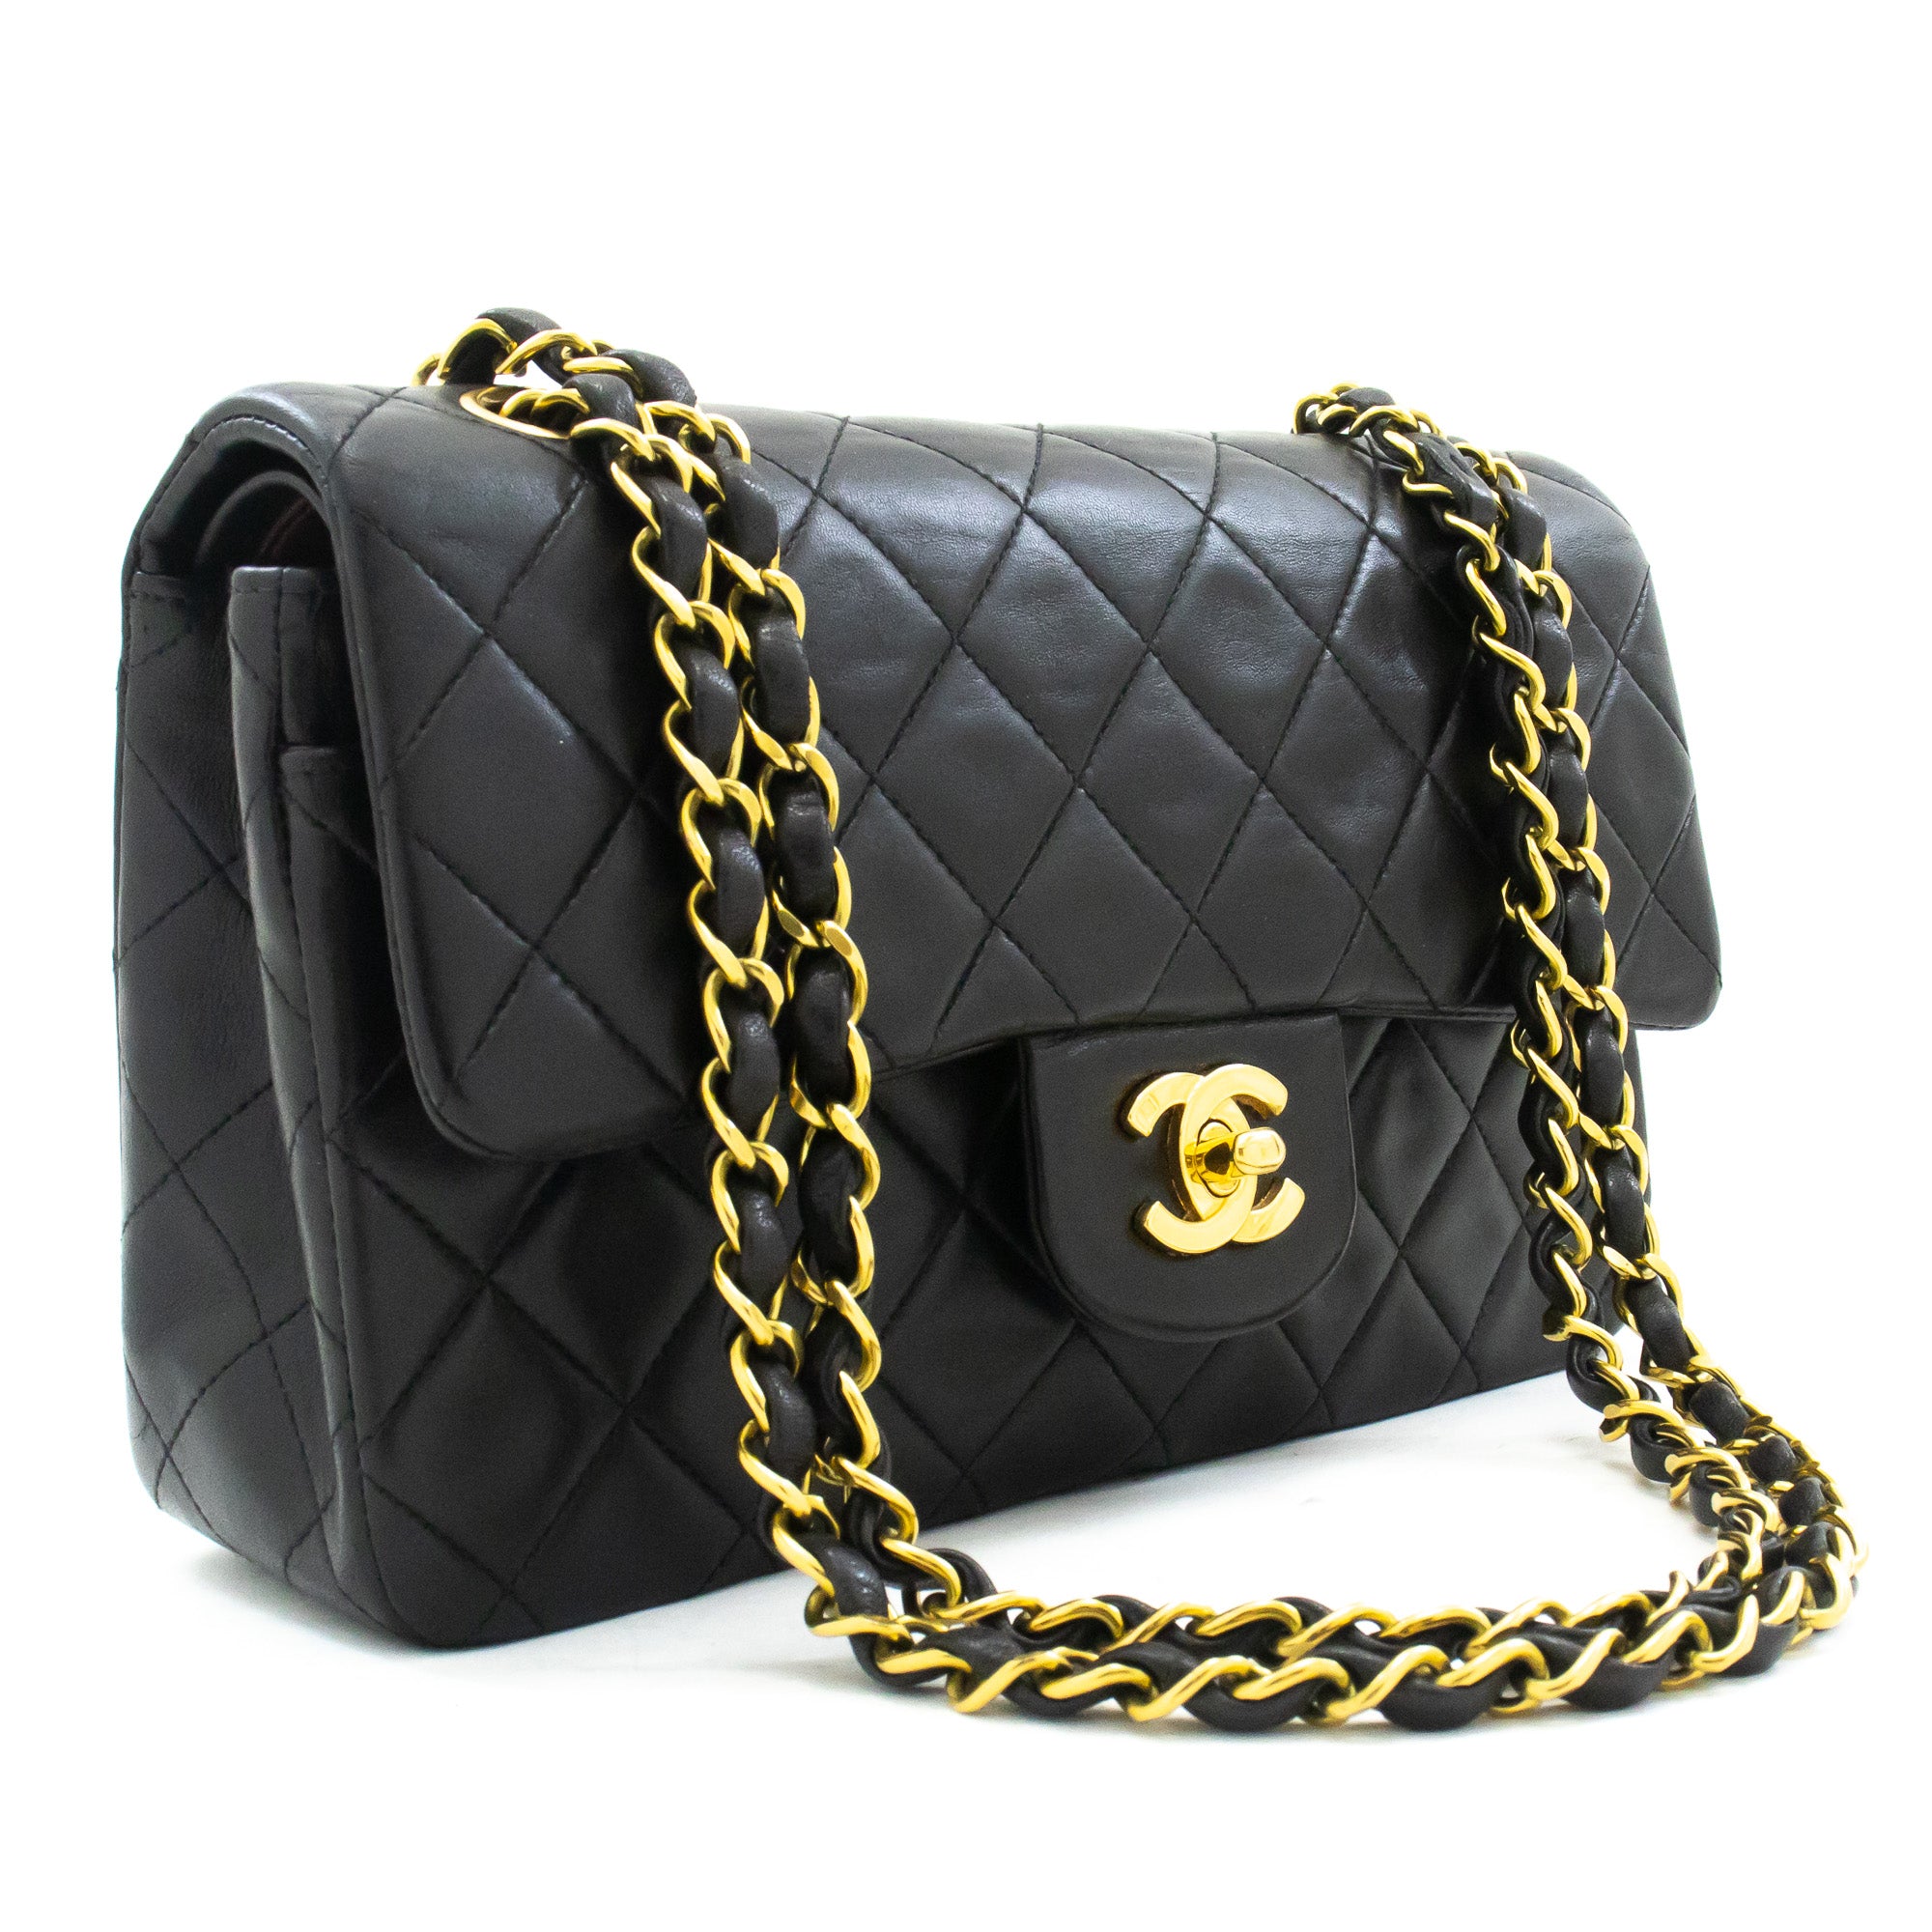 Chanel Caviar Wallet on Chain Woc Black Shoulder Bag Crossbody L26